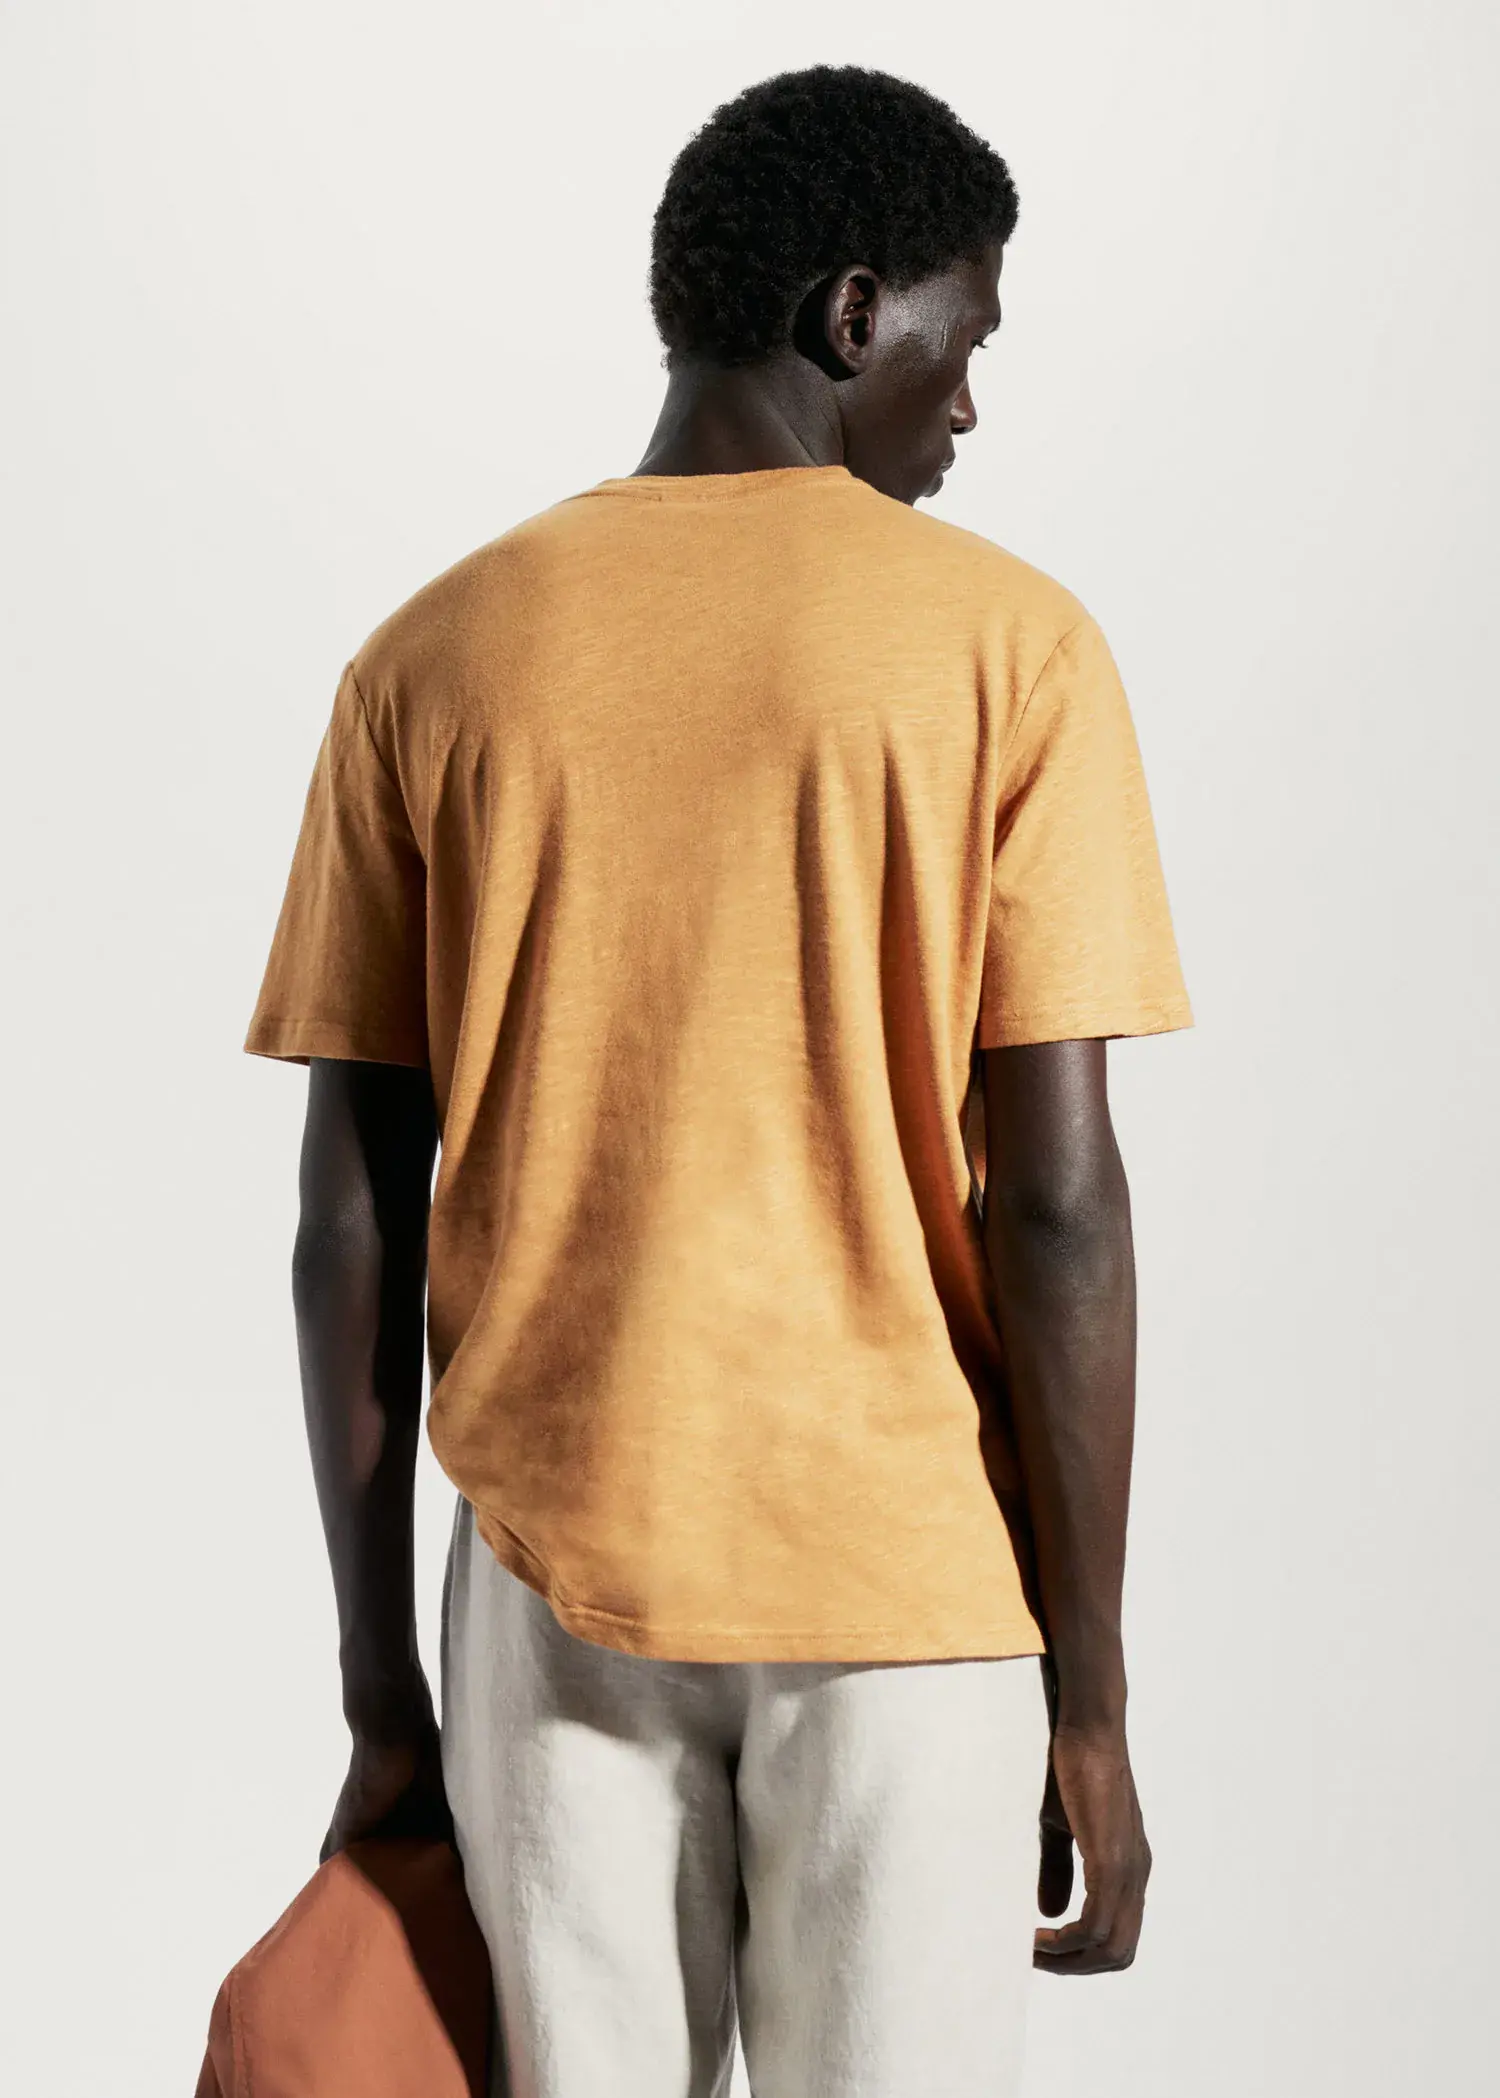 Mango T-shirt coton-lin poche. 3